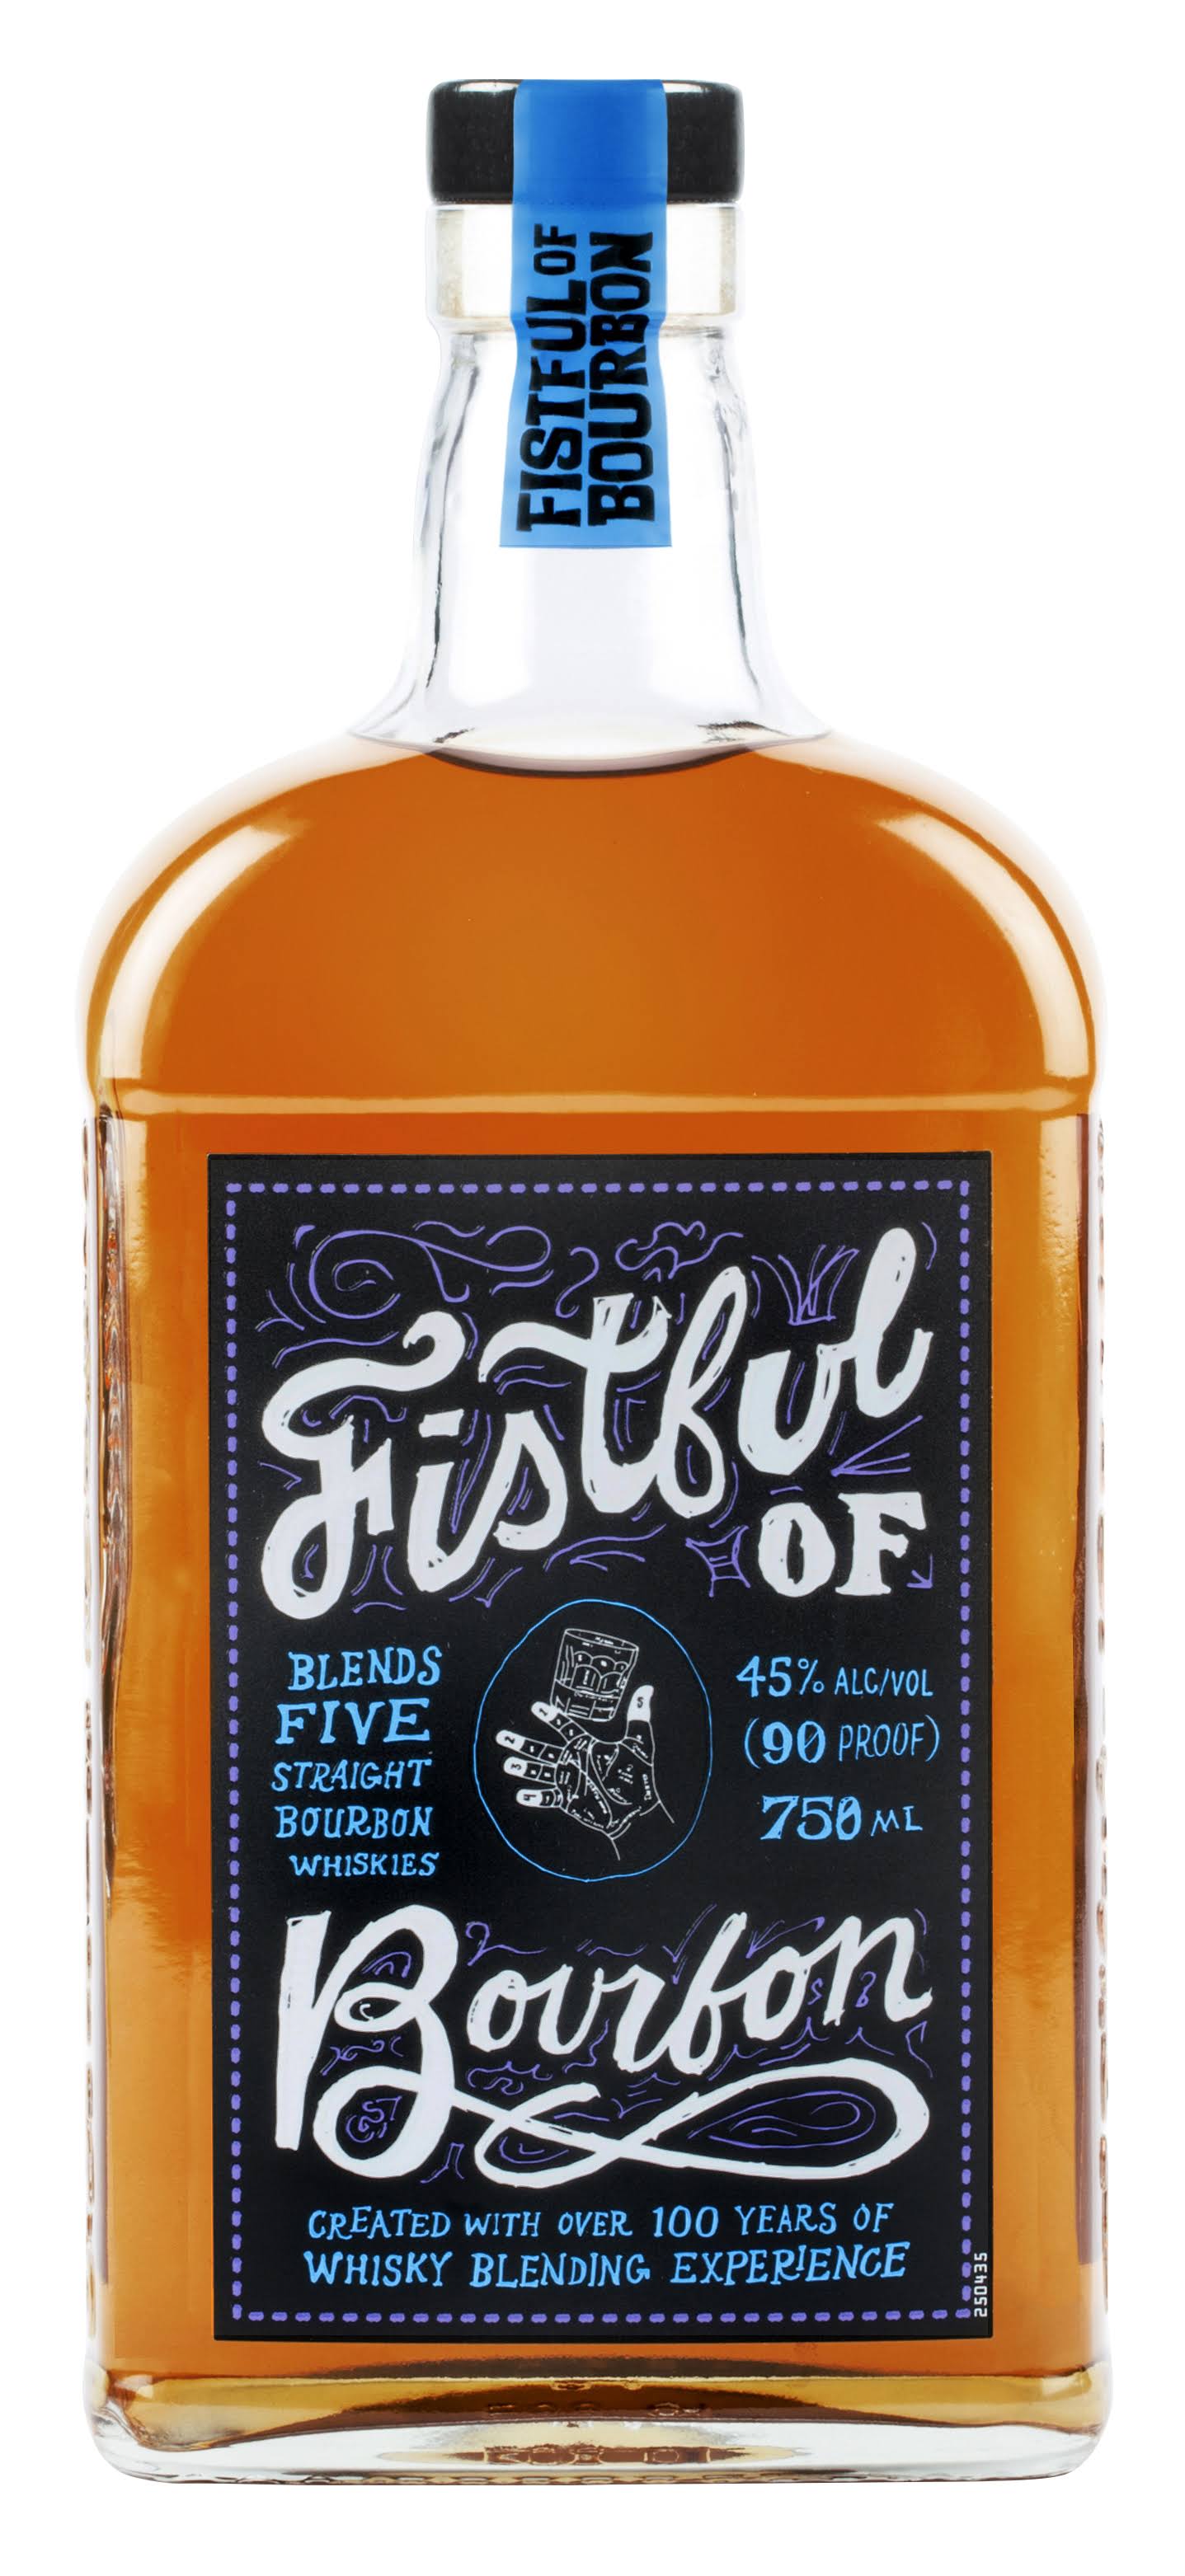 Fistful Of Bourbon Straight Bourbon Whiskies - 750 ml